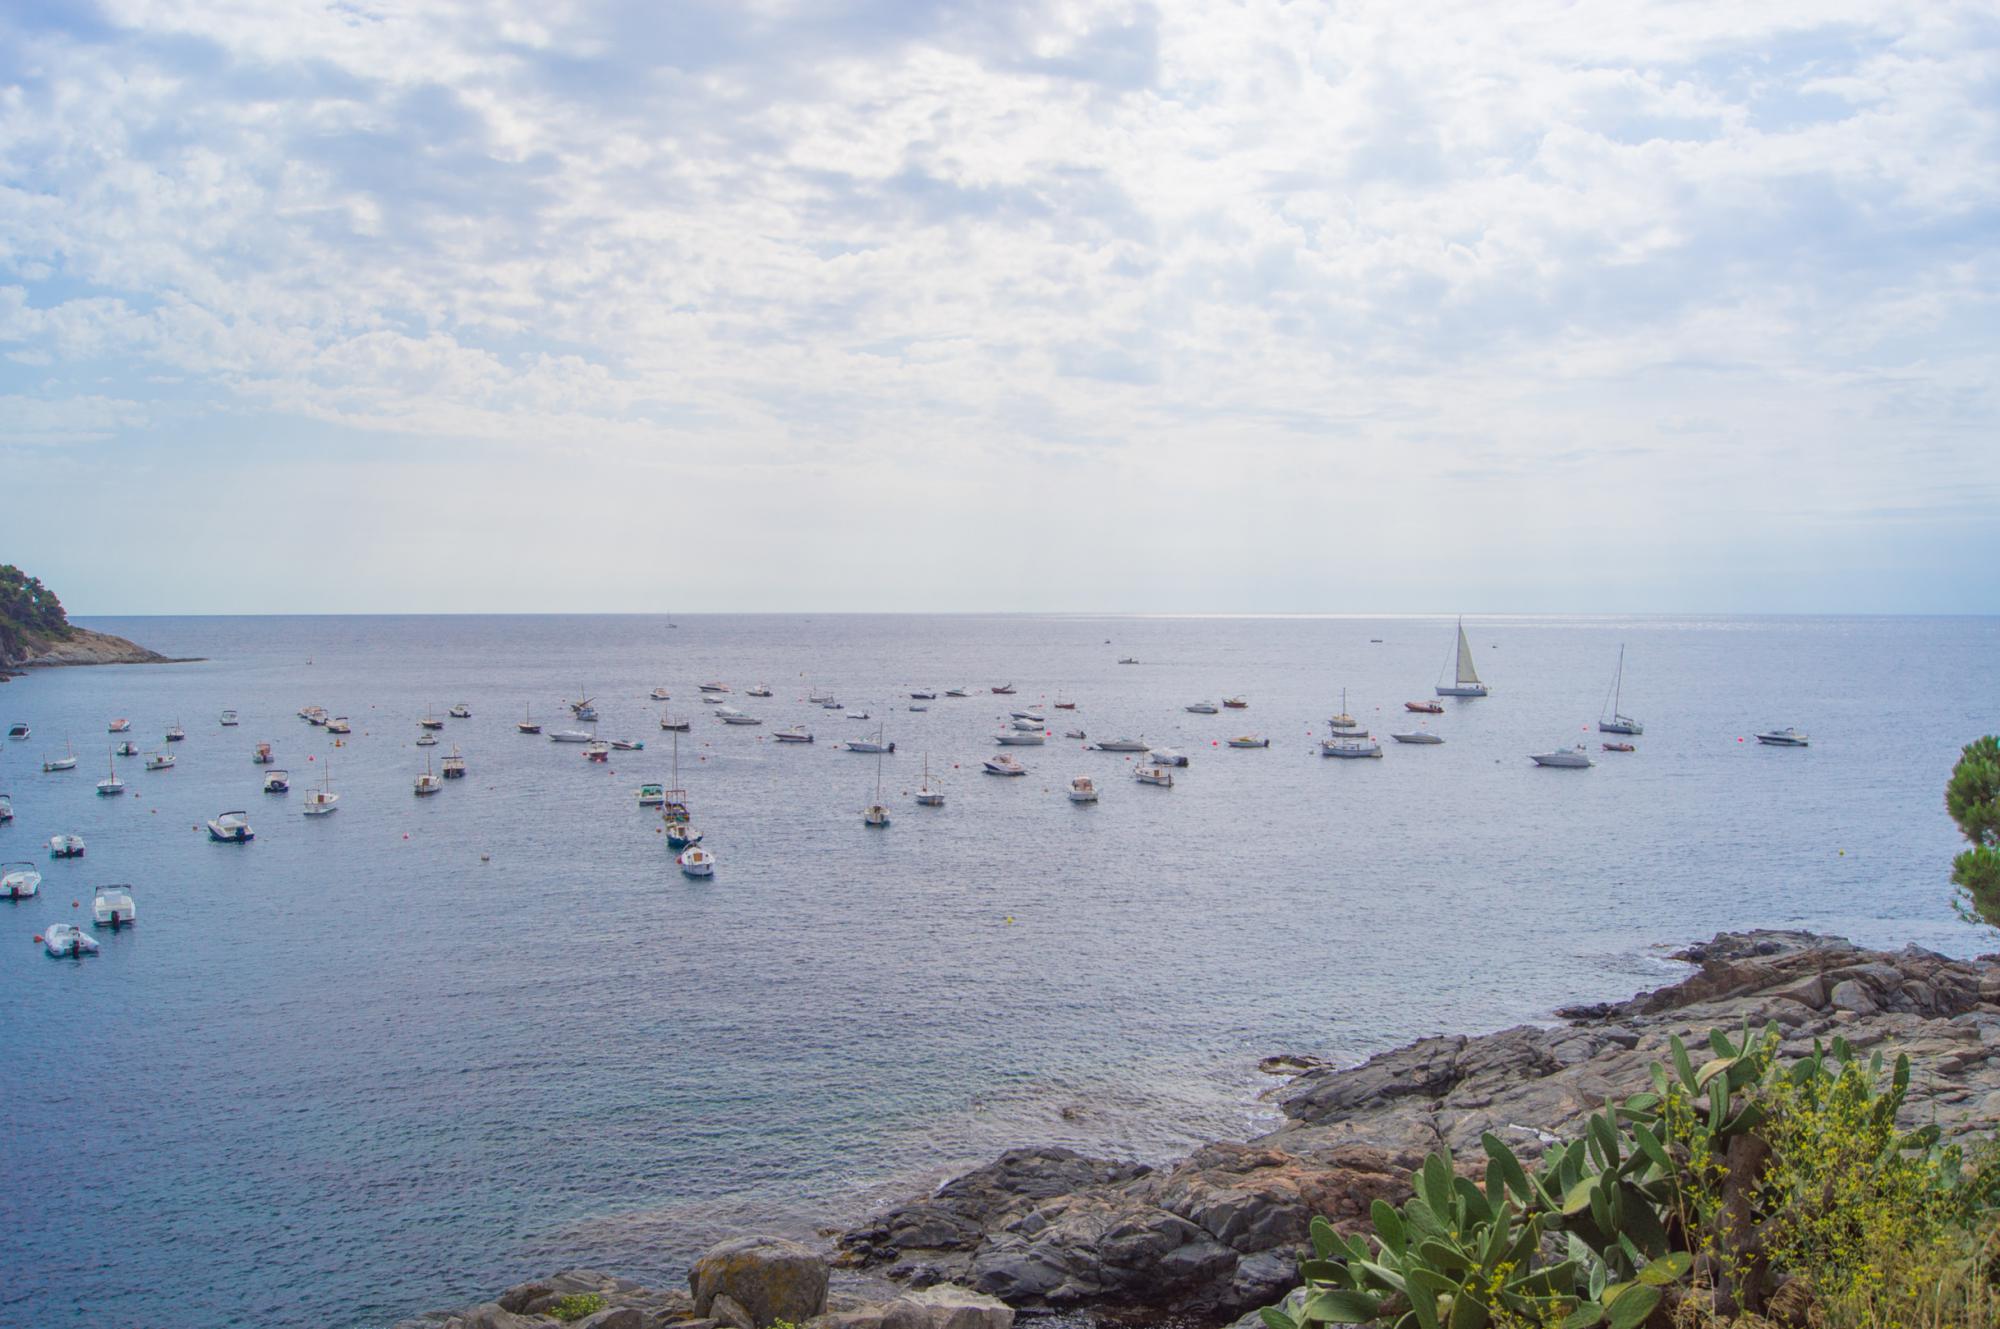 Fishing boats near the town of Llafranc on the Costa Brava